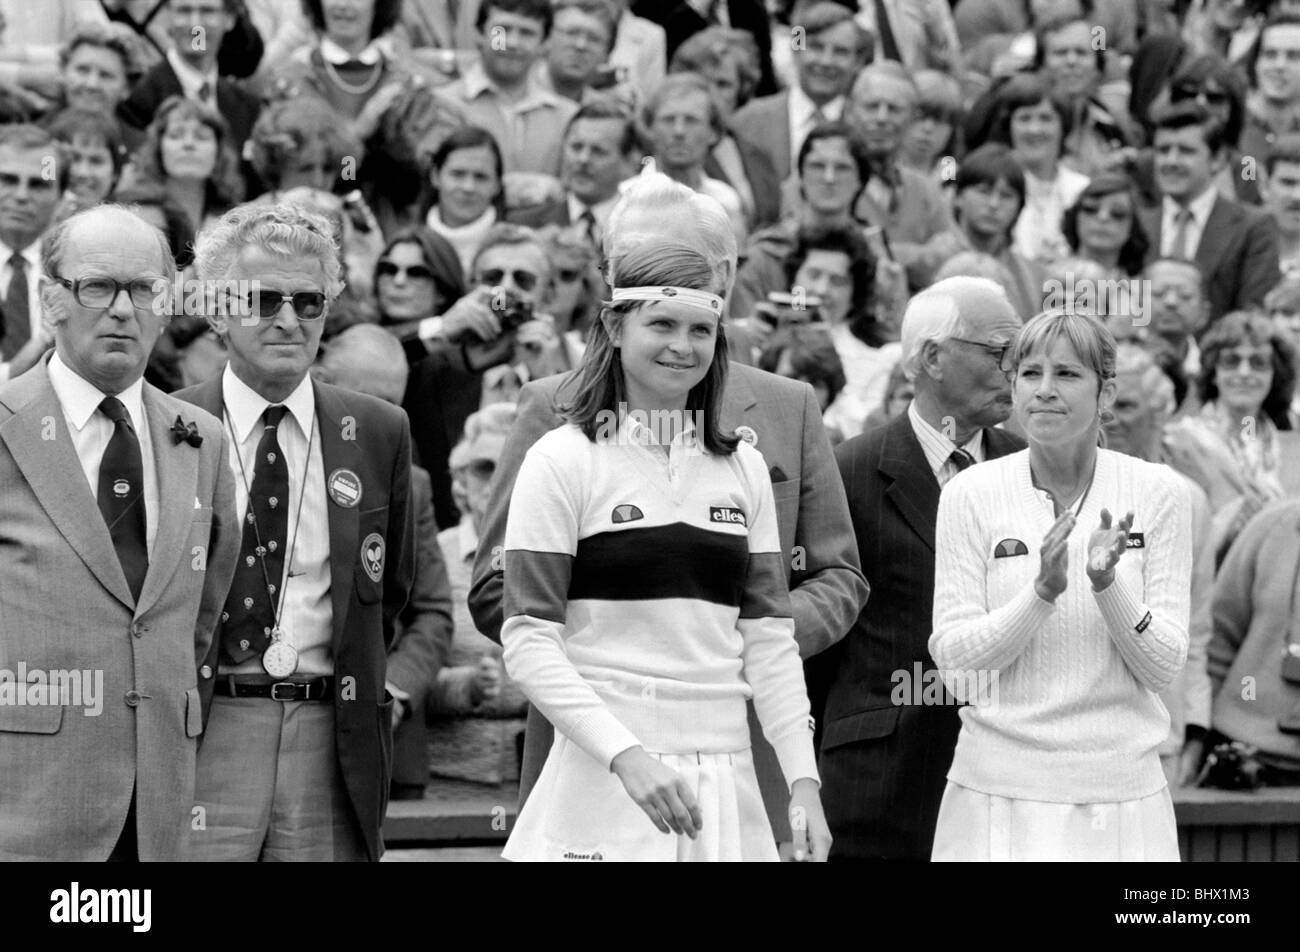 Tournoi de tennis de Wimbledon. 1981 Womens finales. Chris Evert Lloyd c. Hana Mandlikova. L'observation de la princesse Diana. Juillet 1981 81-3782-077 Banque D'Images